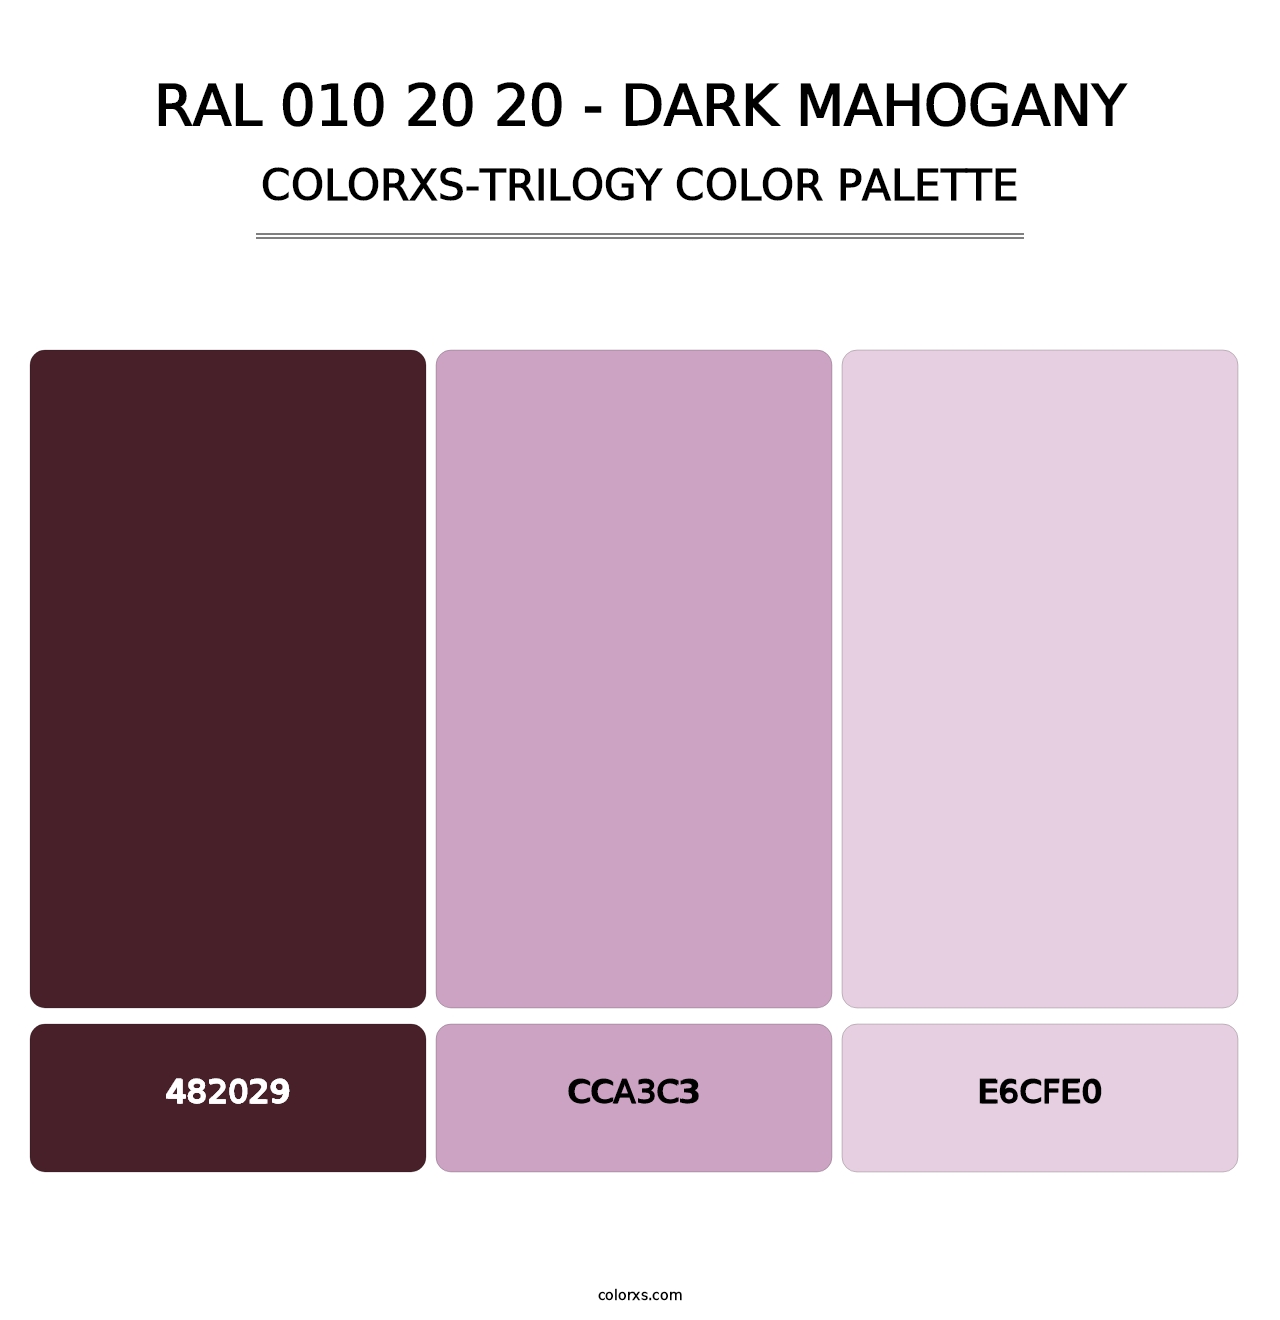 RAL 010 20 20 - Dark Mahogany - Colorxs Trilogy Palette